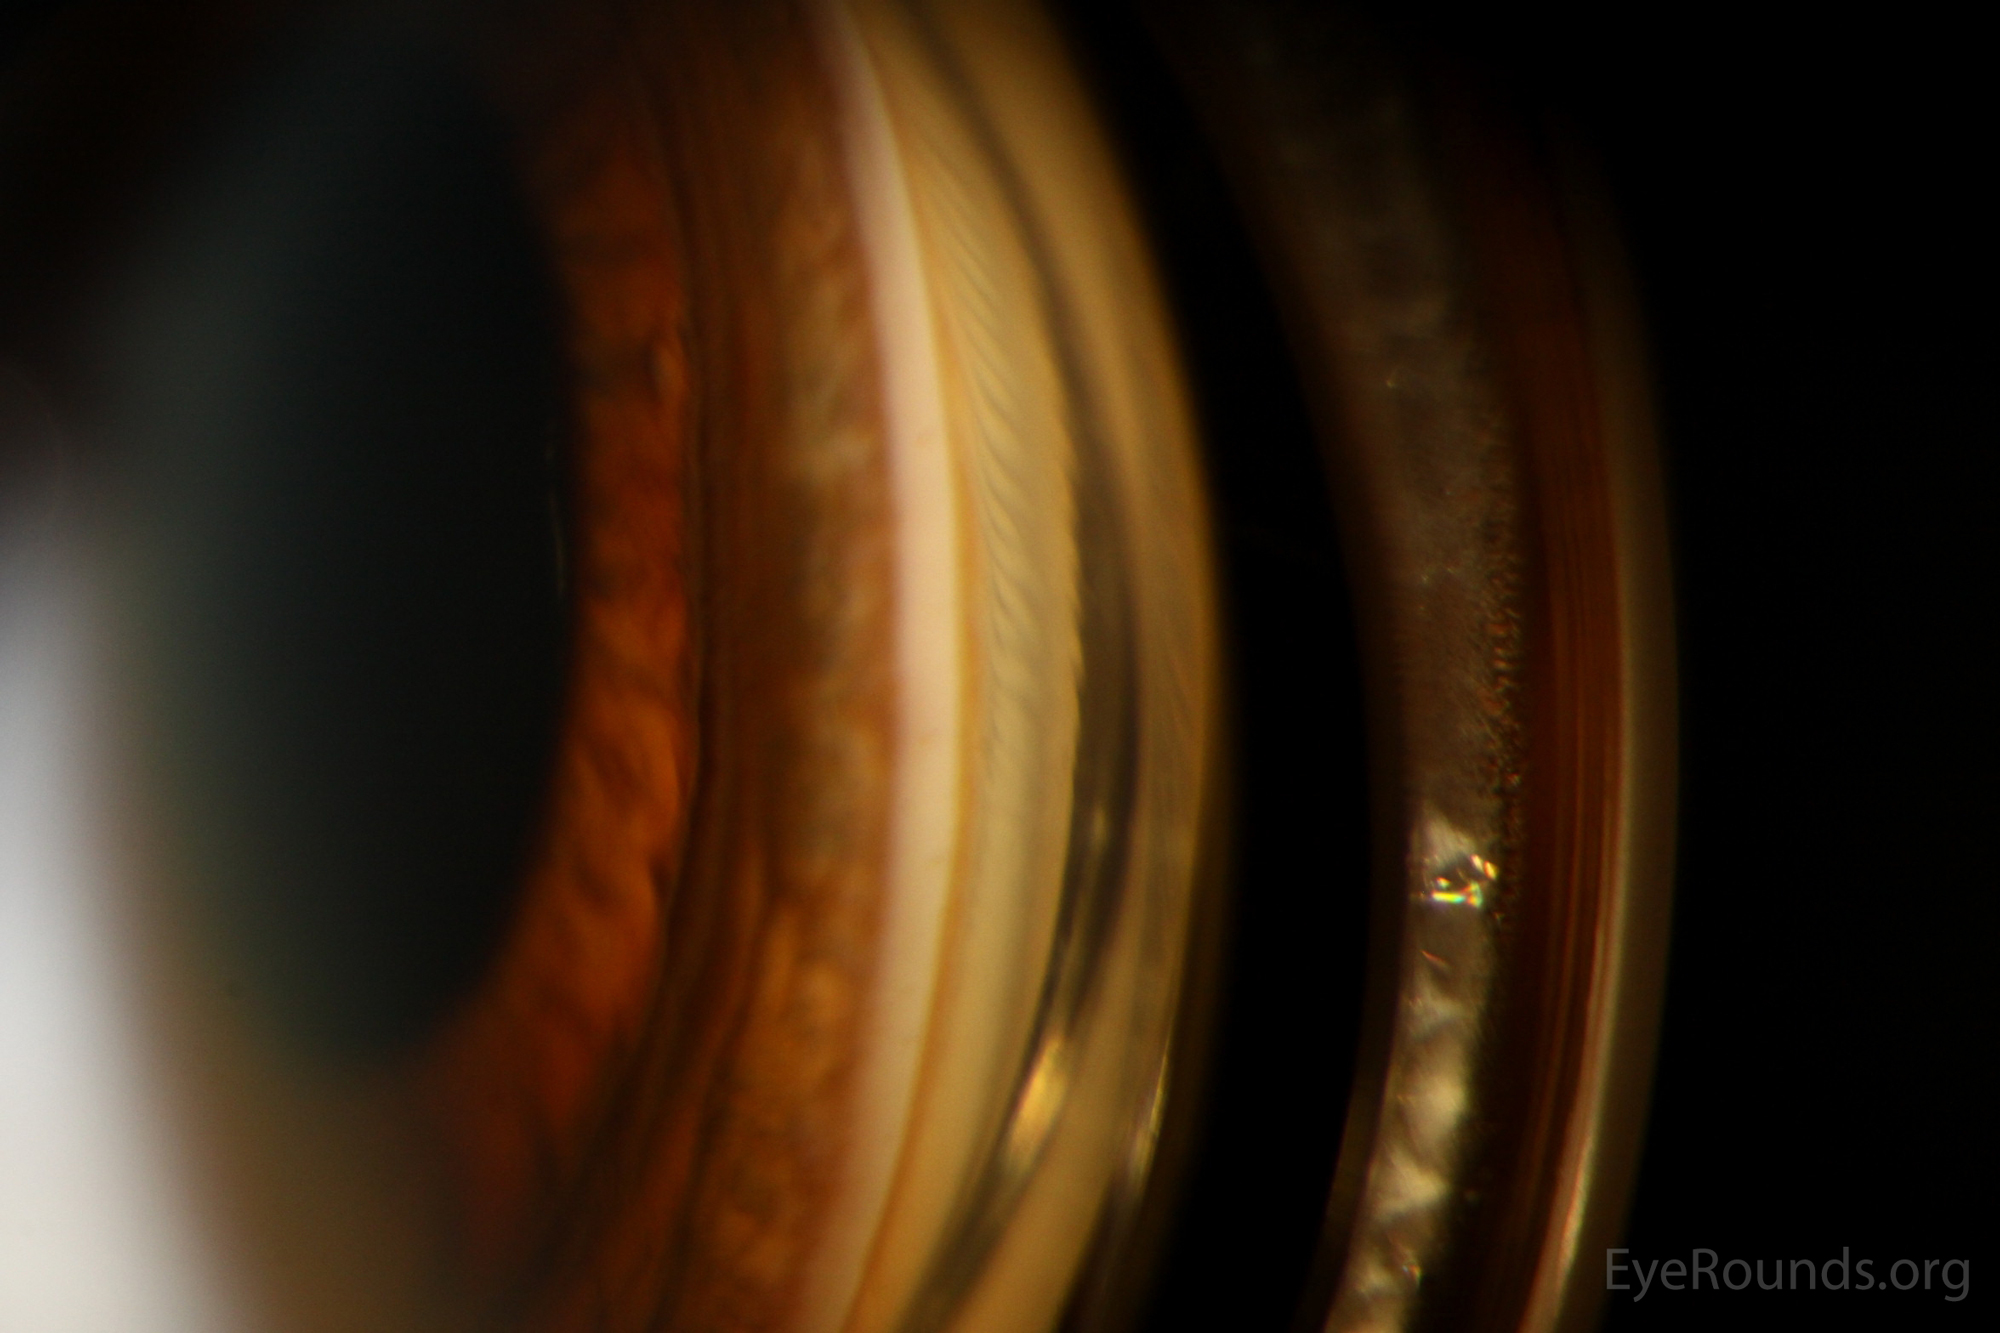  Slit lamp gonioscopy photographs of a Kayser-Fleischer ring